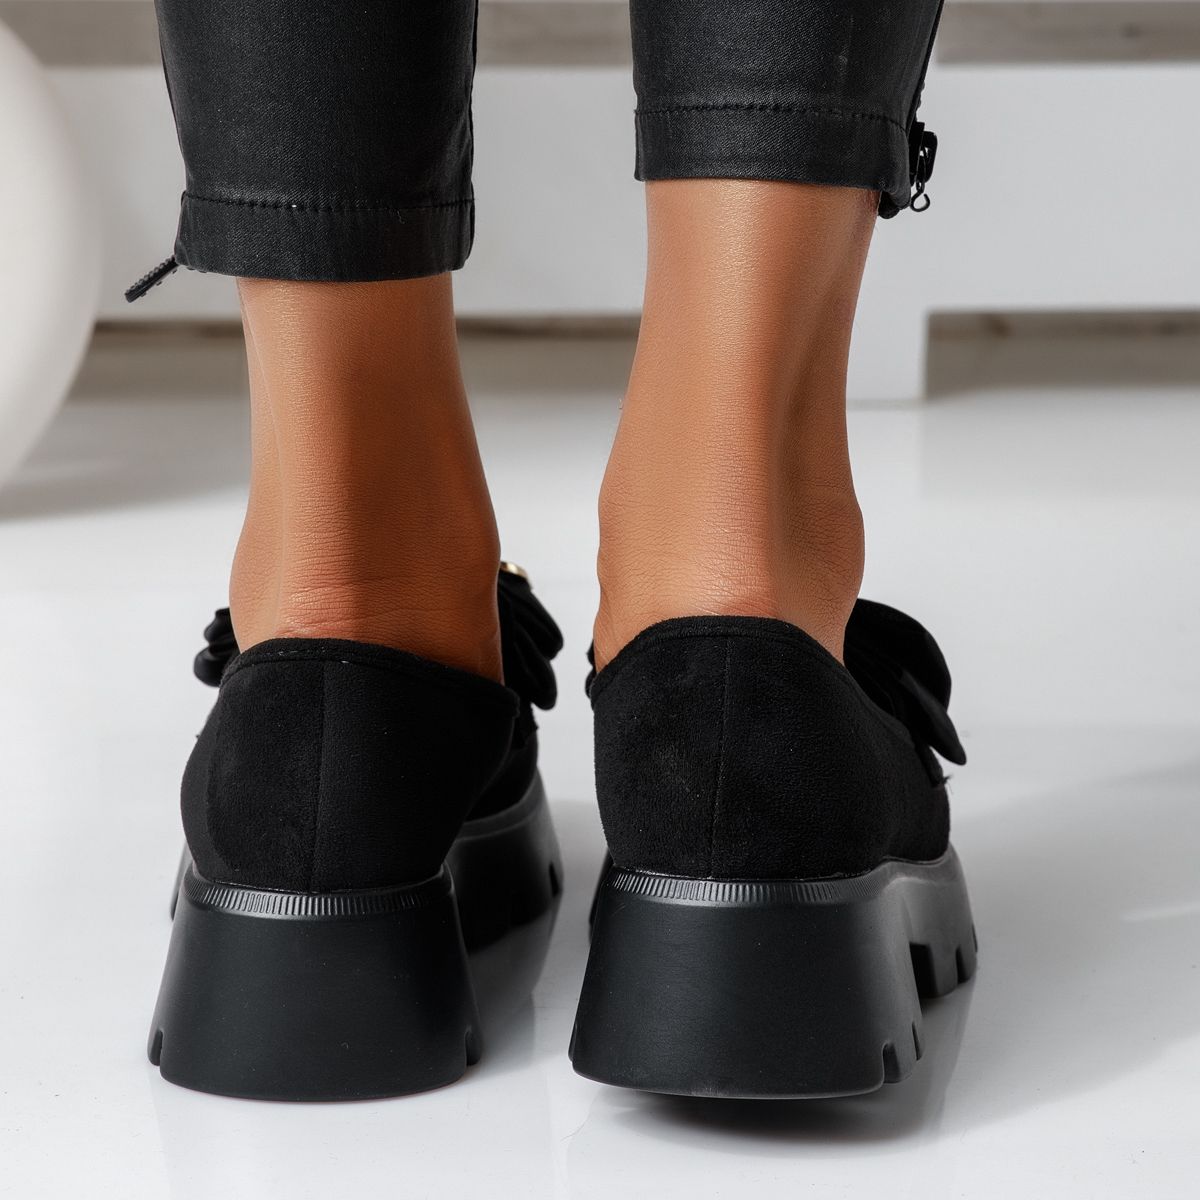 Pantofi Casual Dama Natalia Negri2 #16430